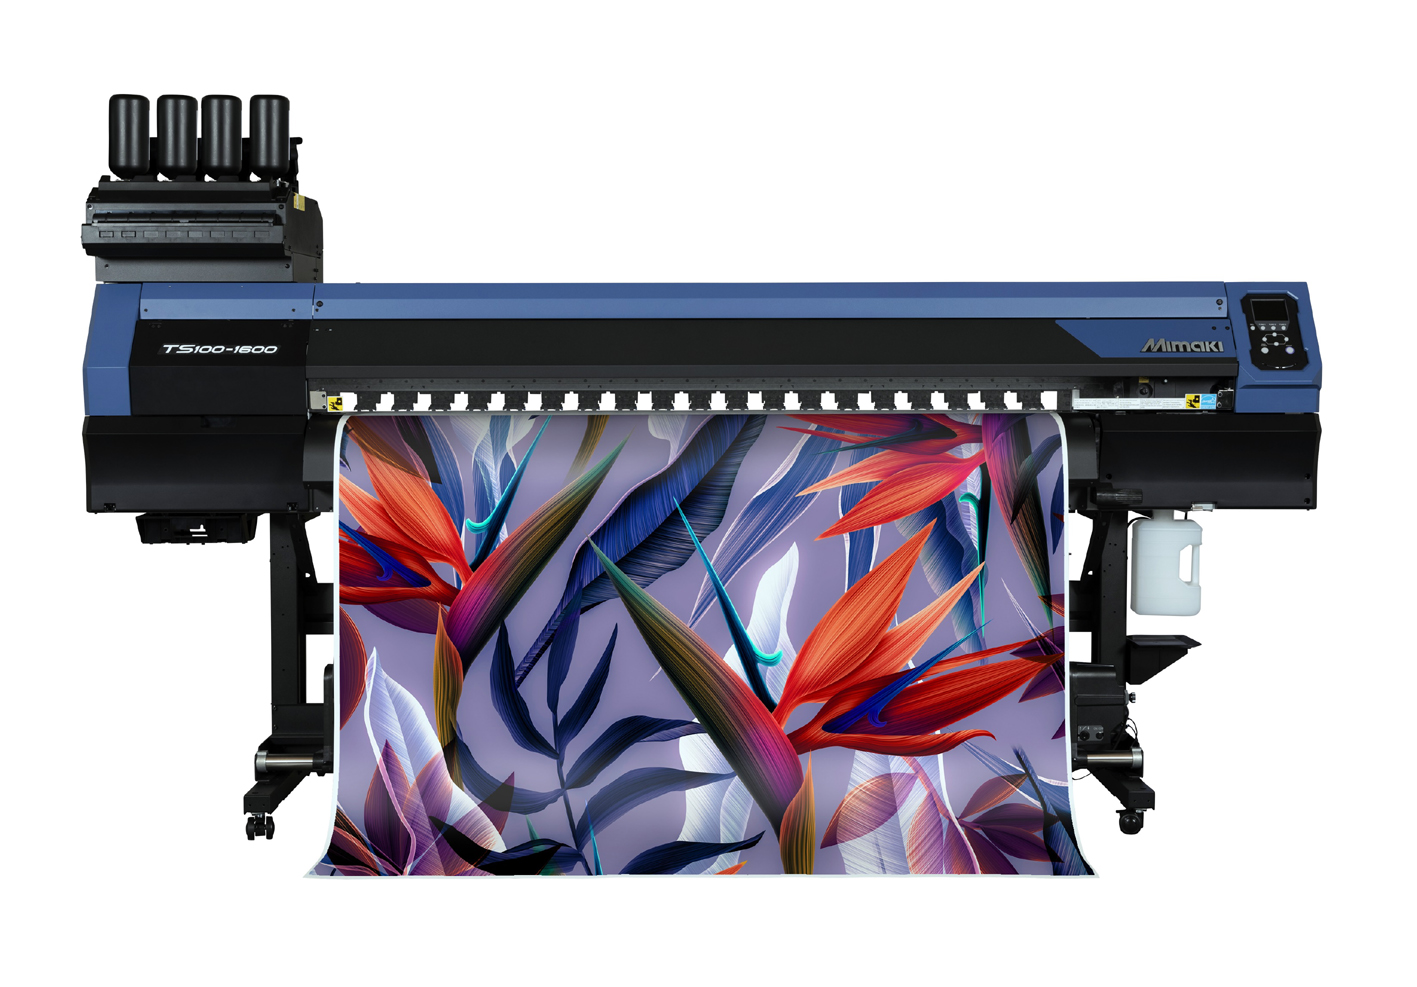 Mimaki’s latest sublimation printer, the TS100-1600.